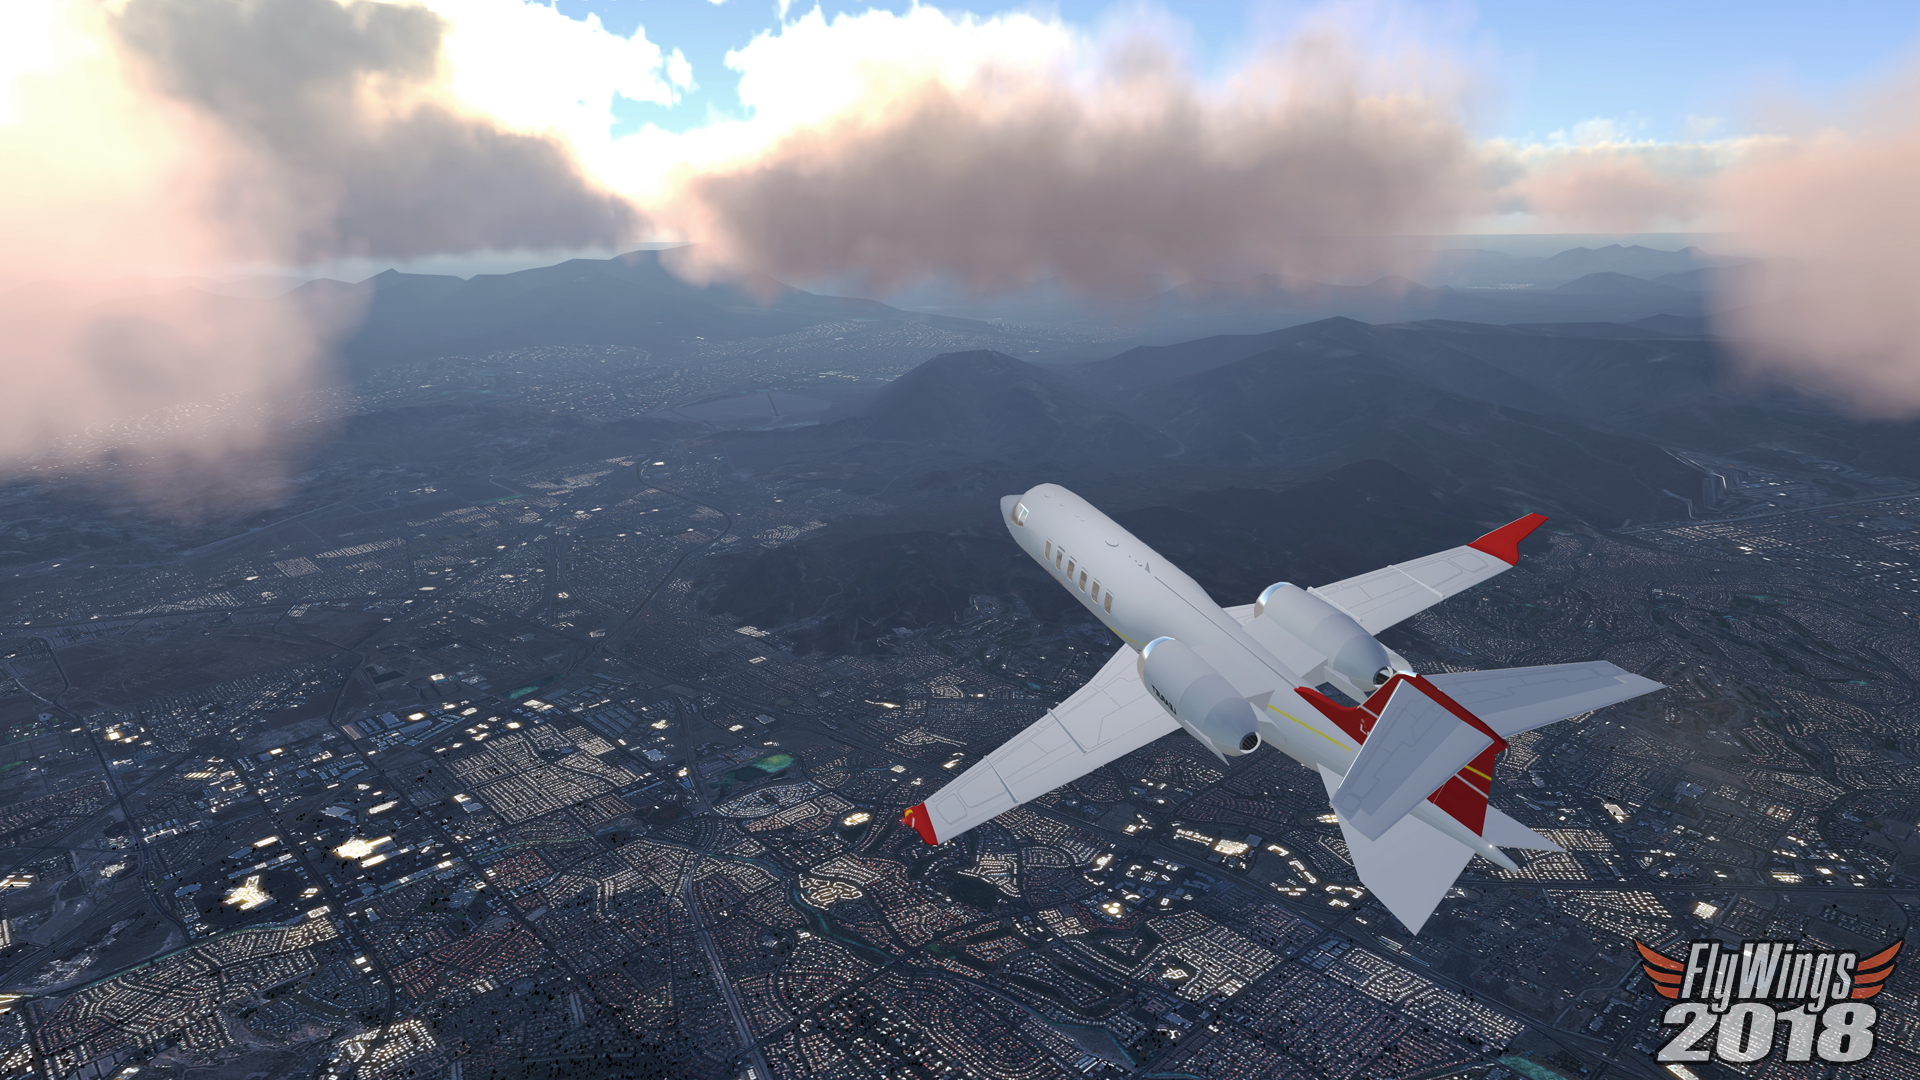 FlyWings 2018 Flight Simulator Free Download for PC